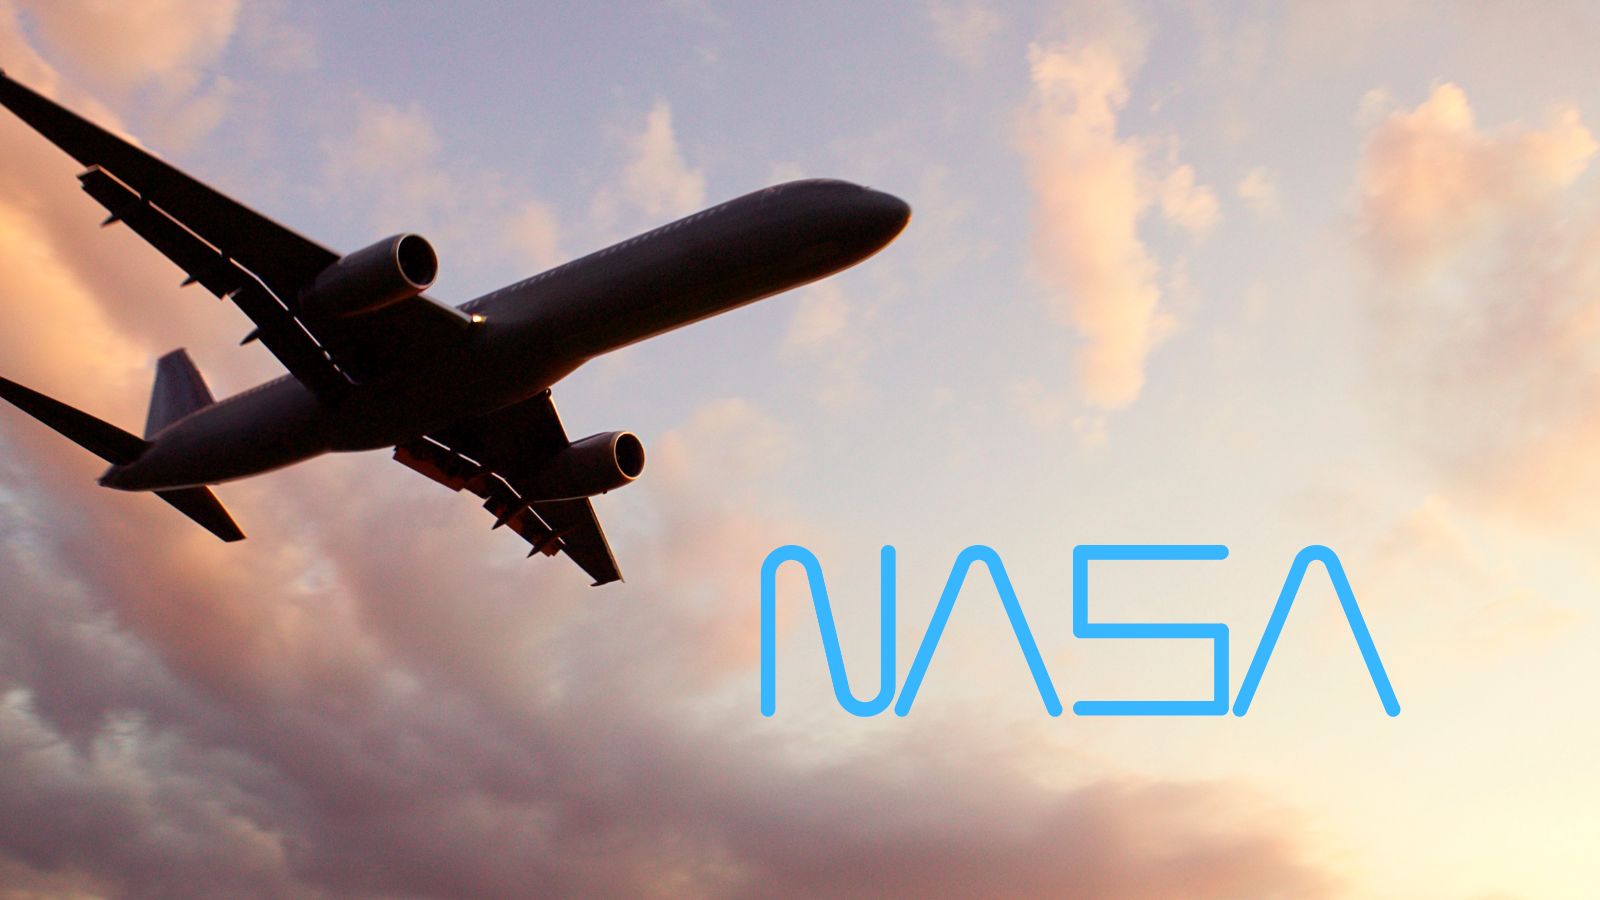 La NASA vuole rivoluzionare il trasporto aereo